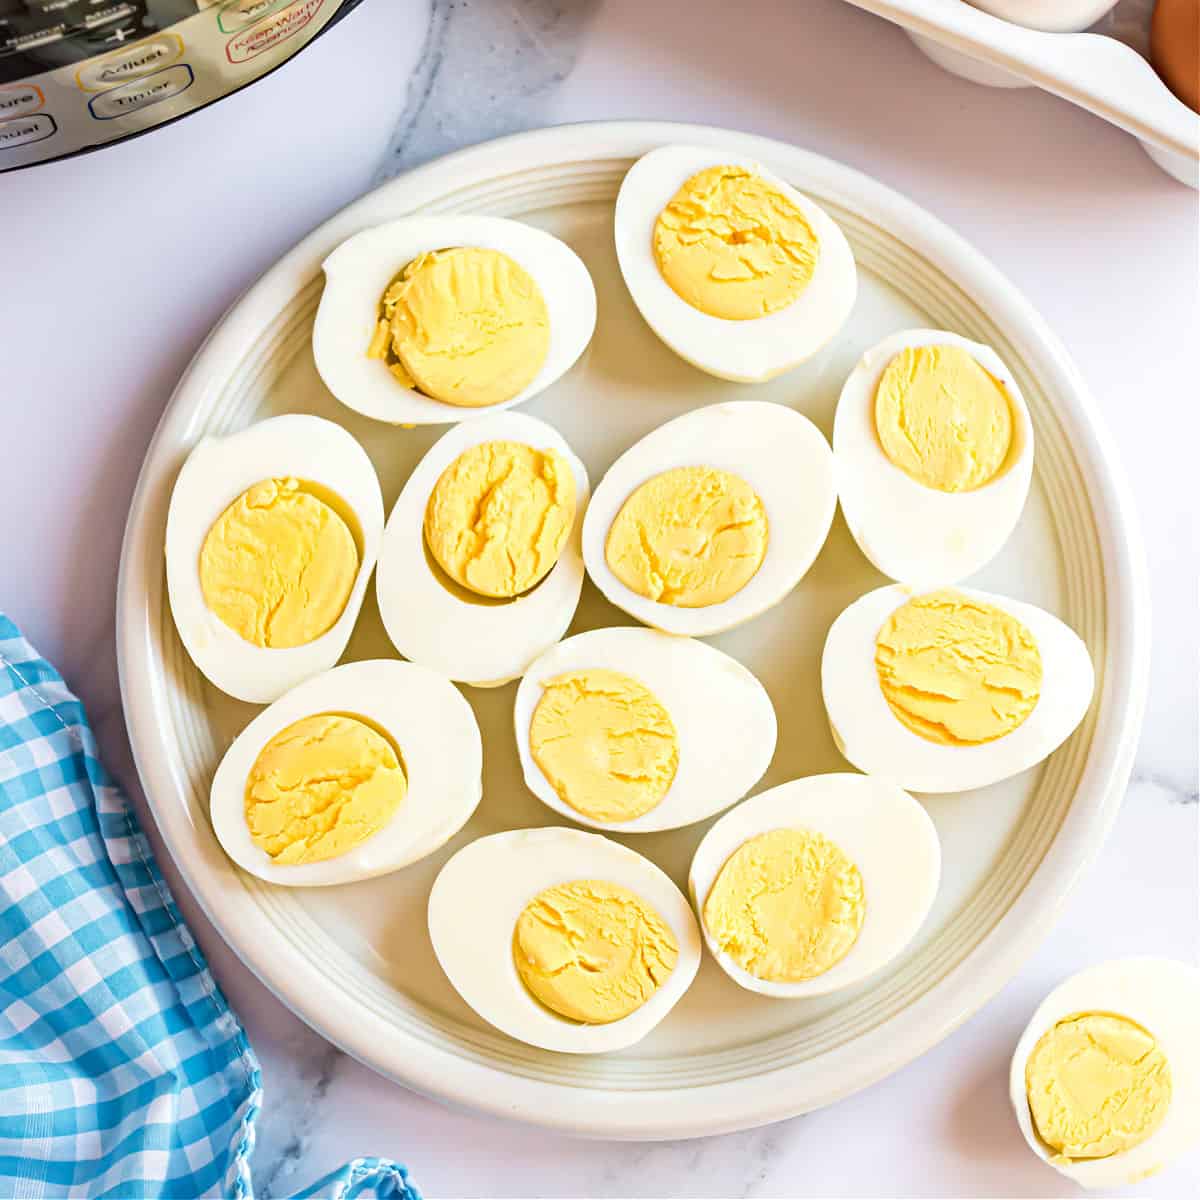 https://www.shugarysweets.com/wp-content/uploads/2018/02/instant-pot-eggs-recipe.jpg